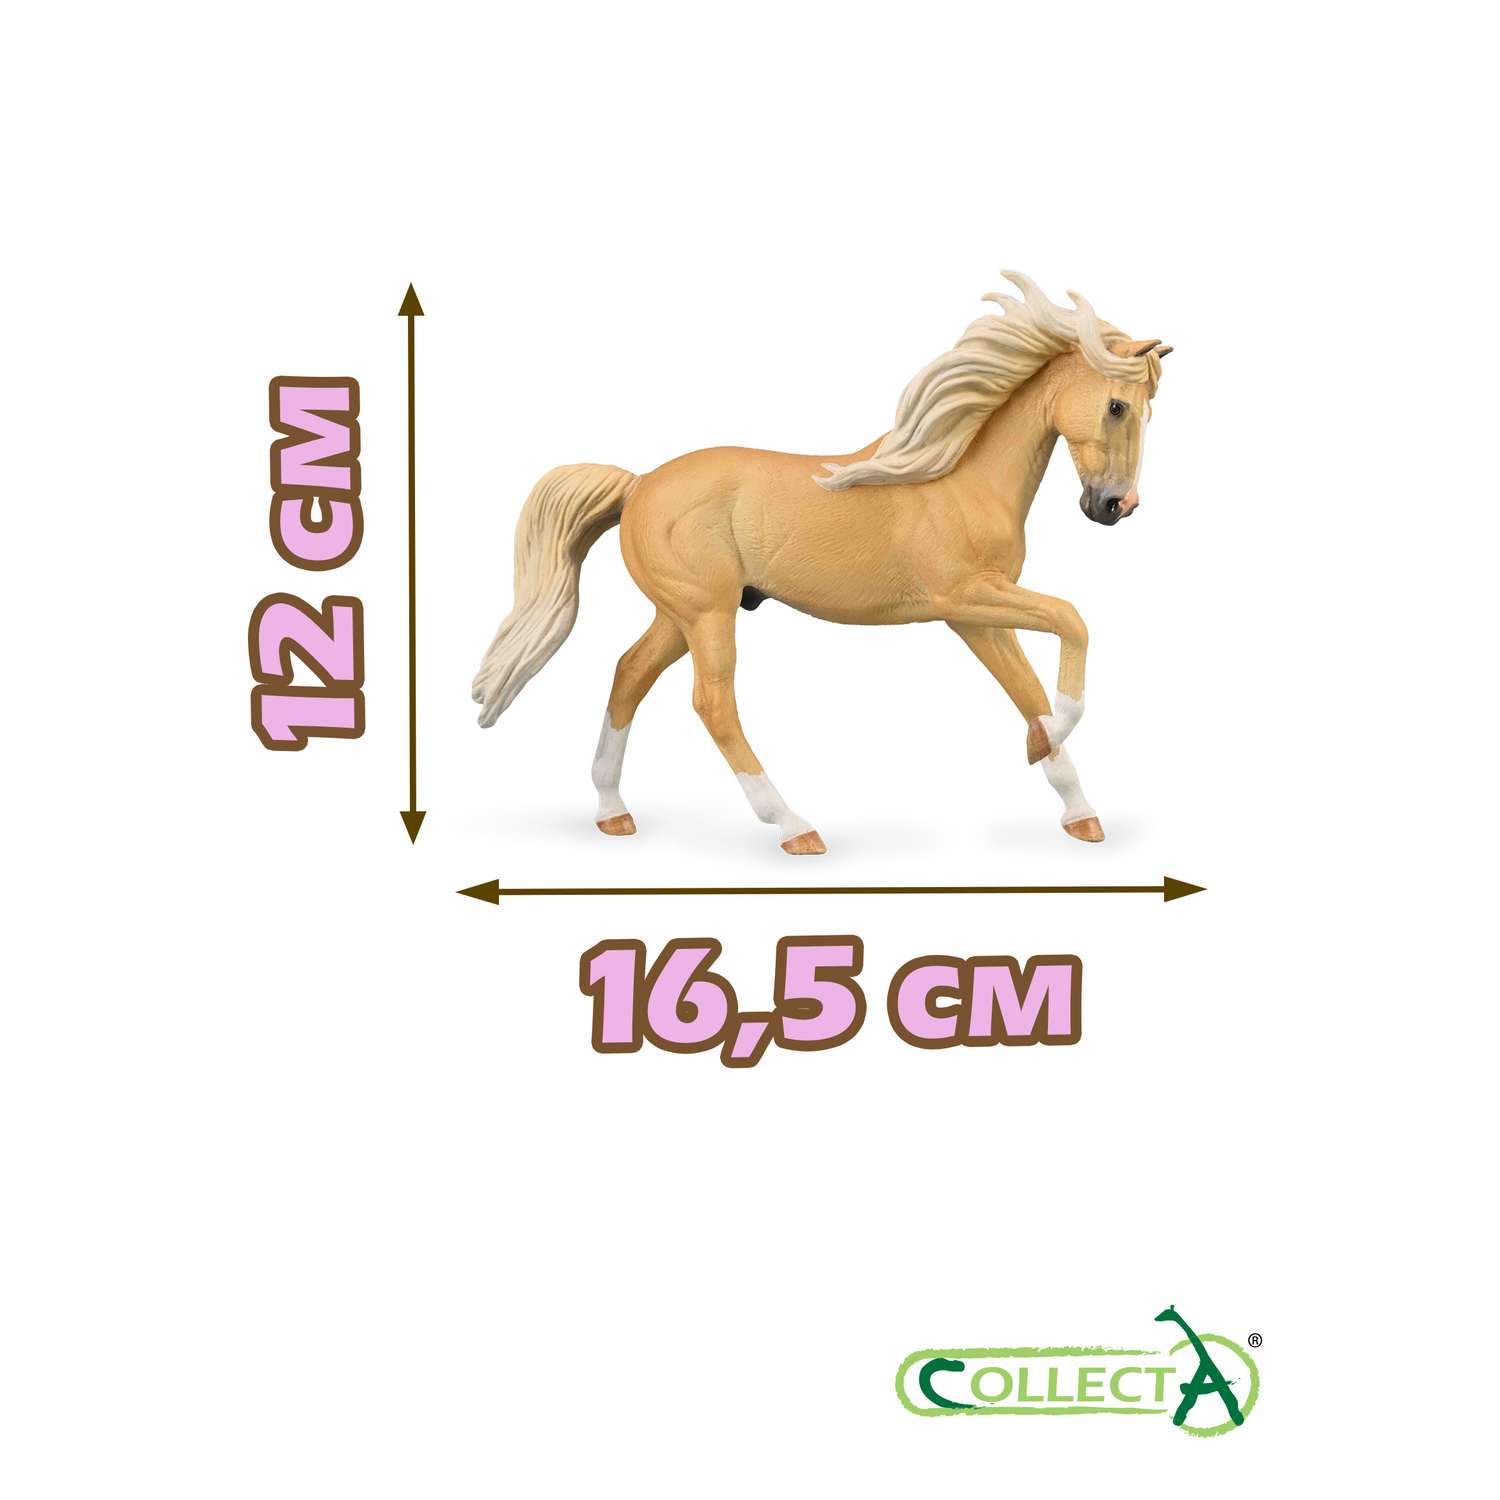 Фигурка животного Collecta Лошадь Андалузский жеребец - Паломино - фото 2